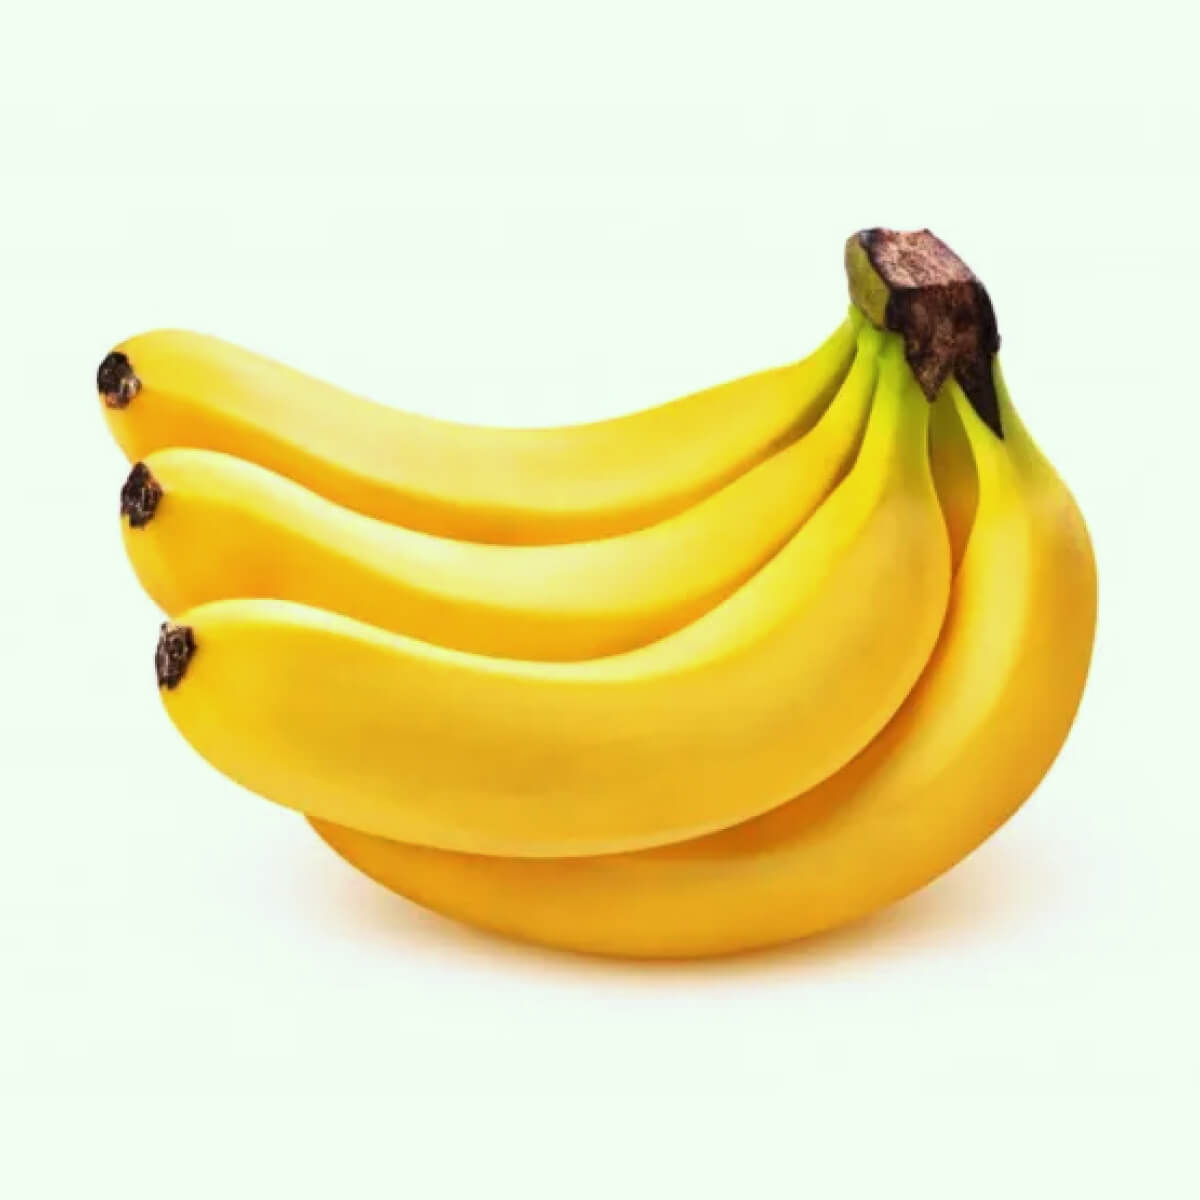 National Brand Fresh Organic Bananas, 3 Lb, Pack Of 2 Bunches